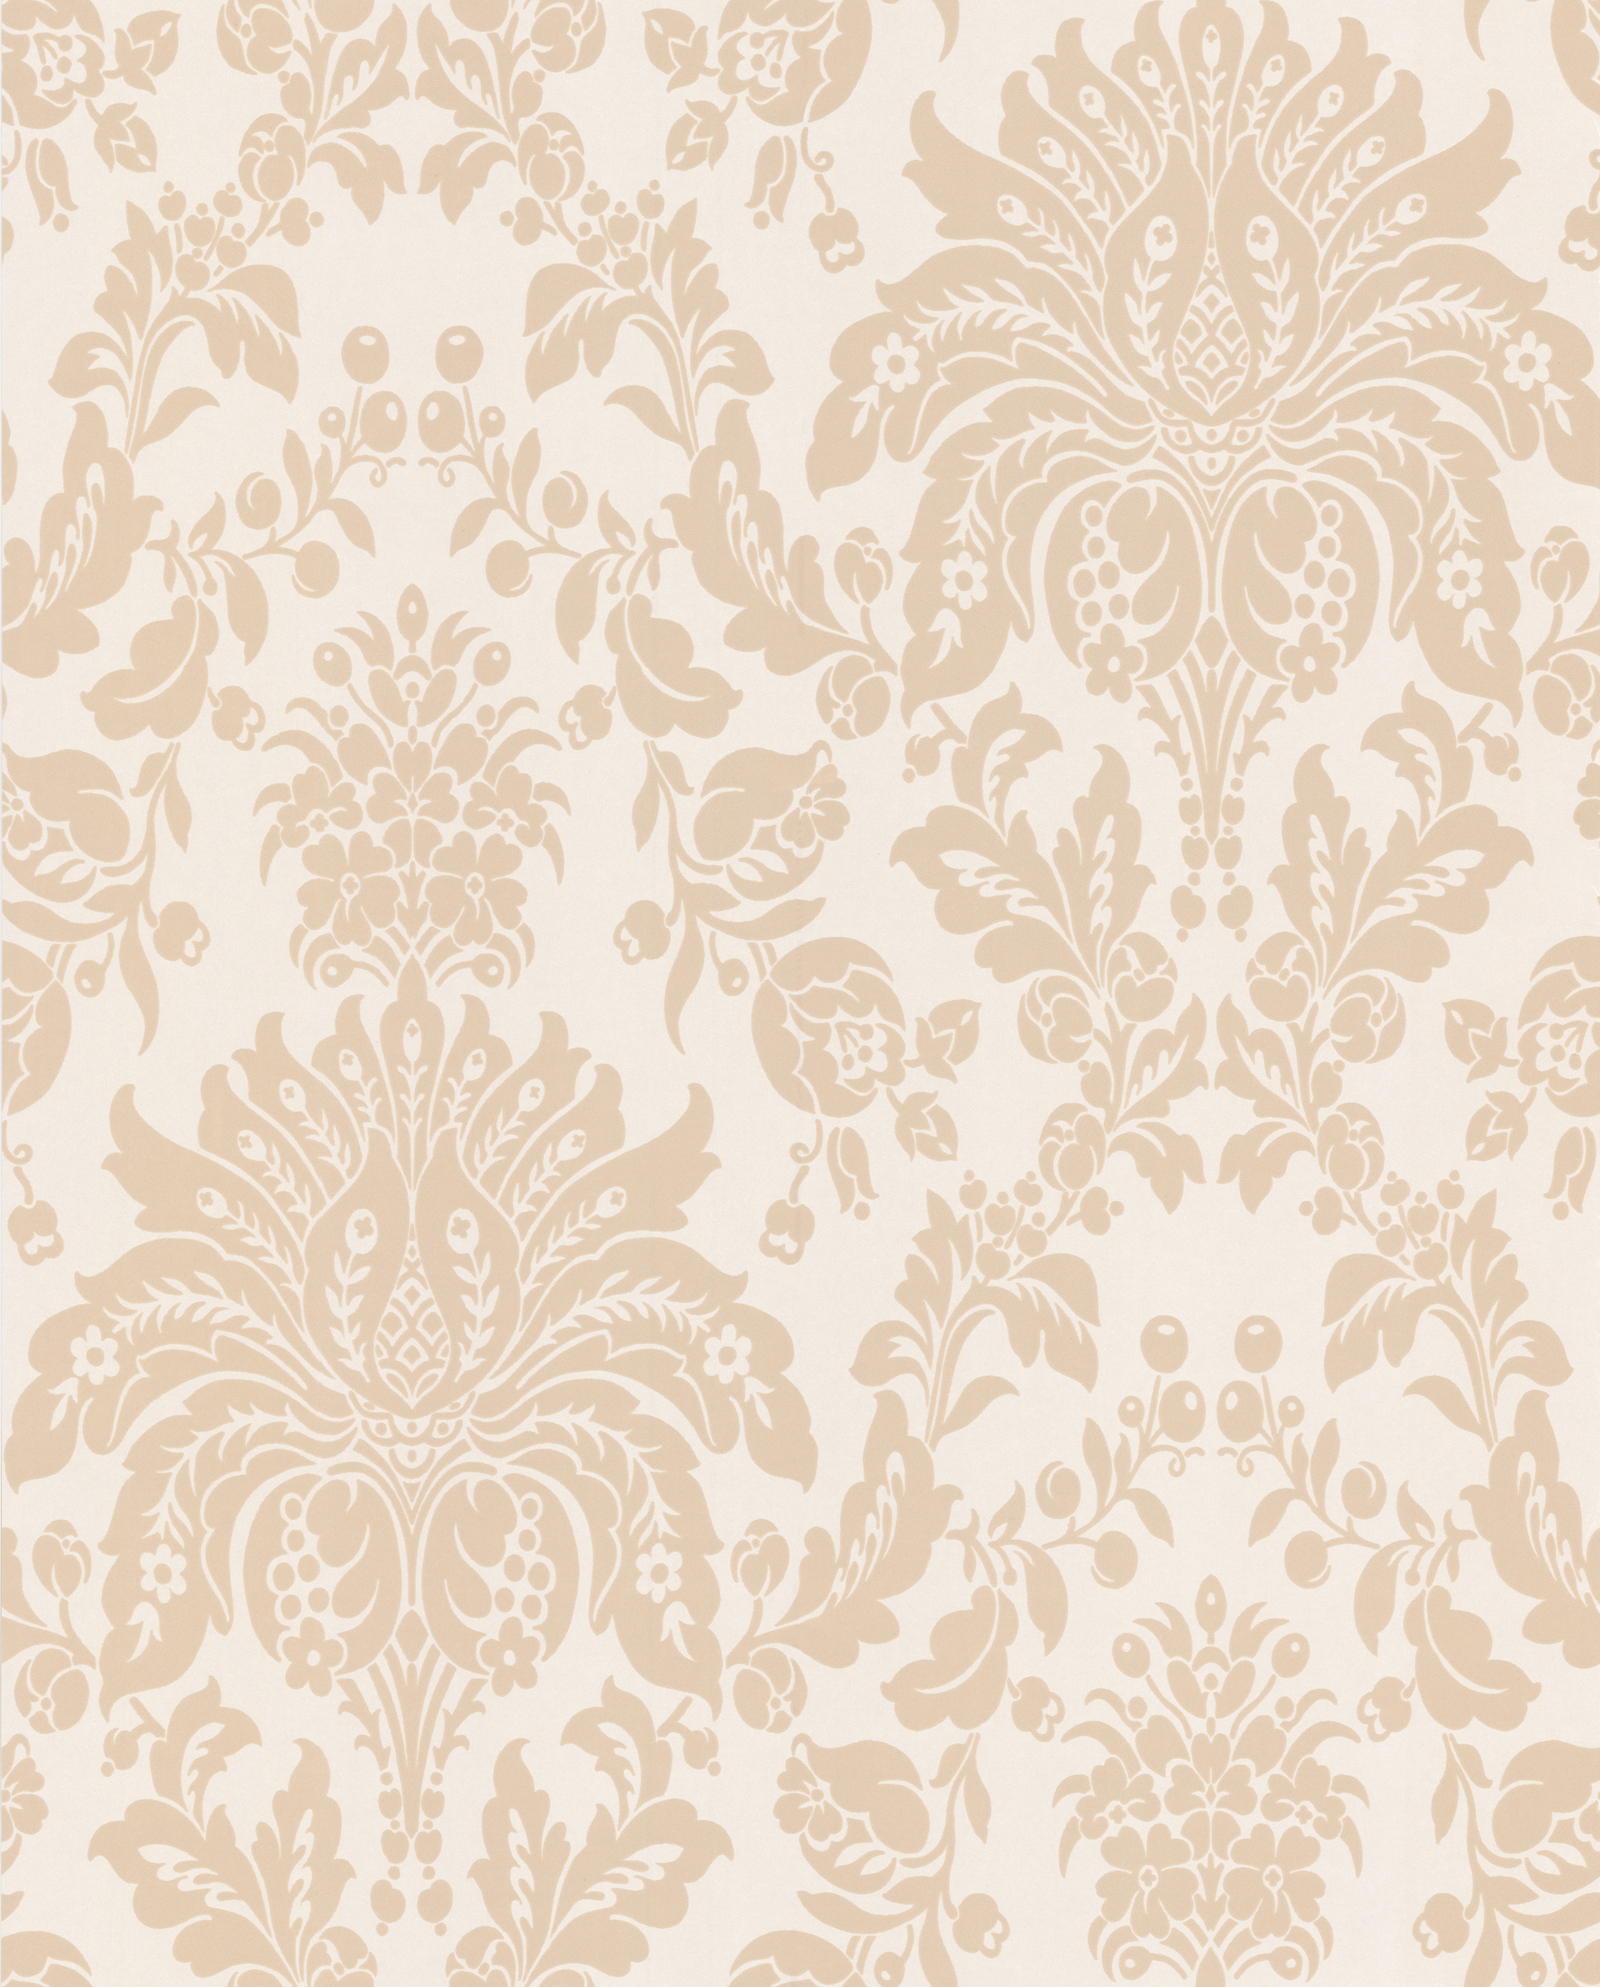 classic wallpaper texture,pattern,wallpaper,brown,beige,design